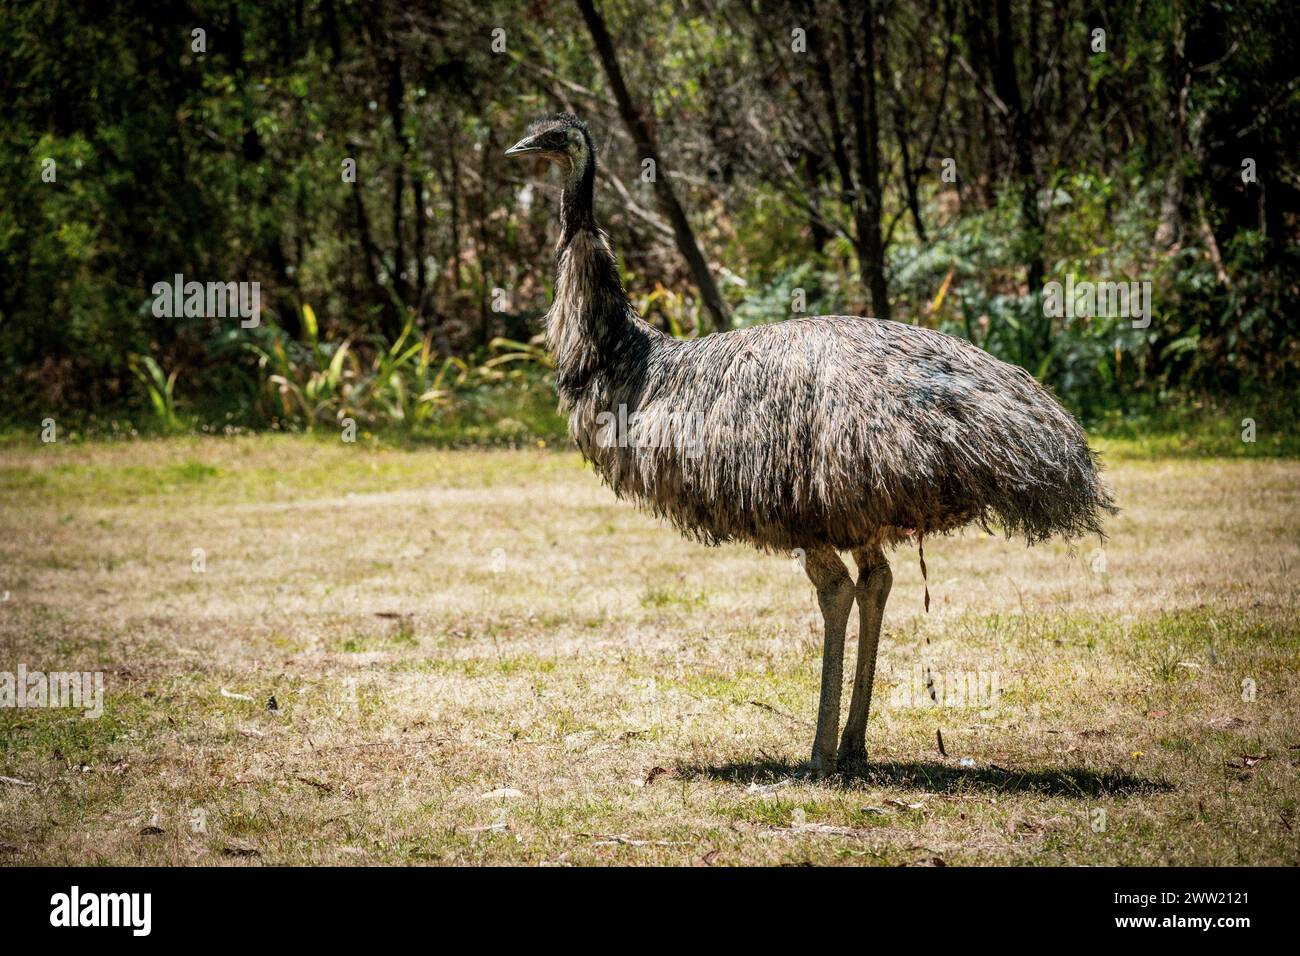 A solitary emu wandering through the Australian bush landscape. Stock Photo